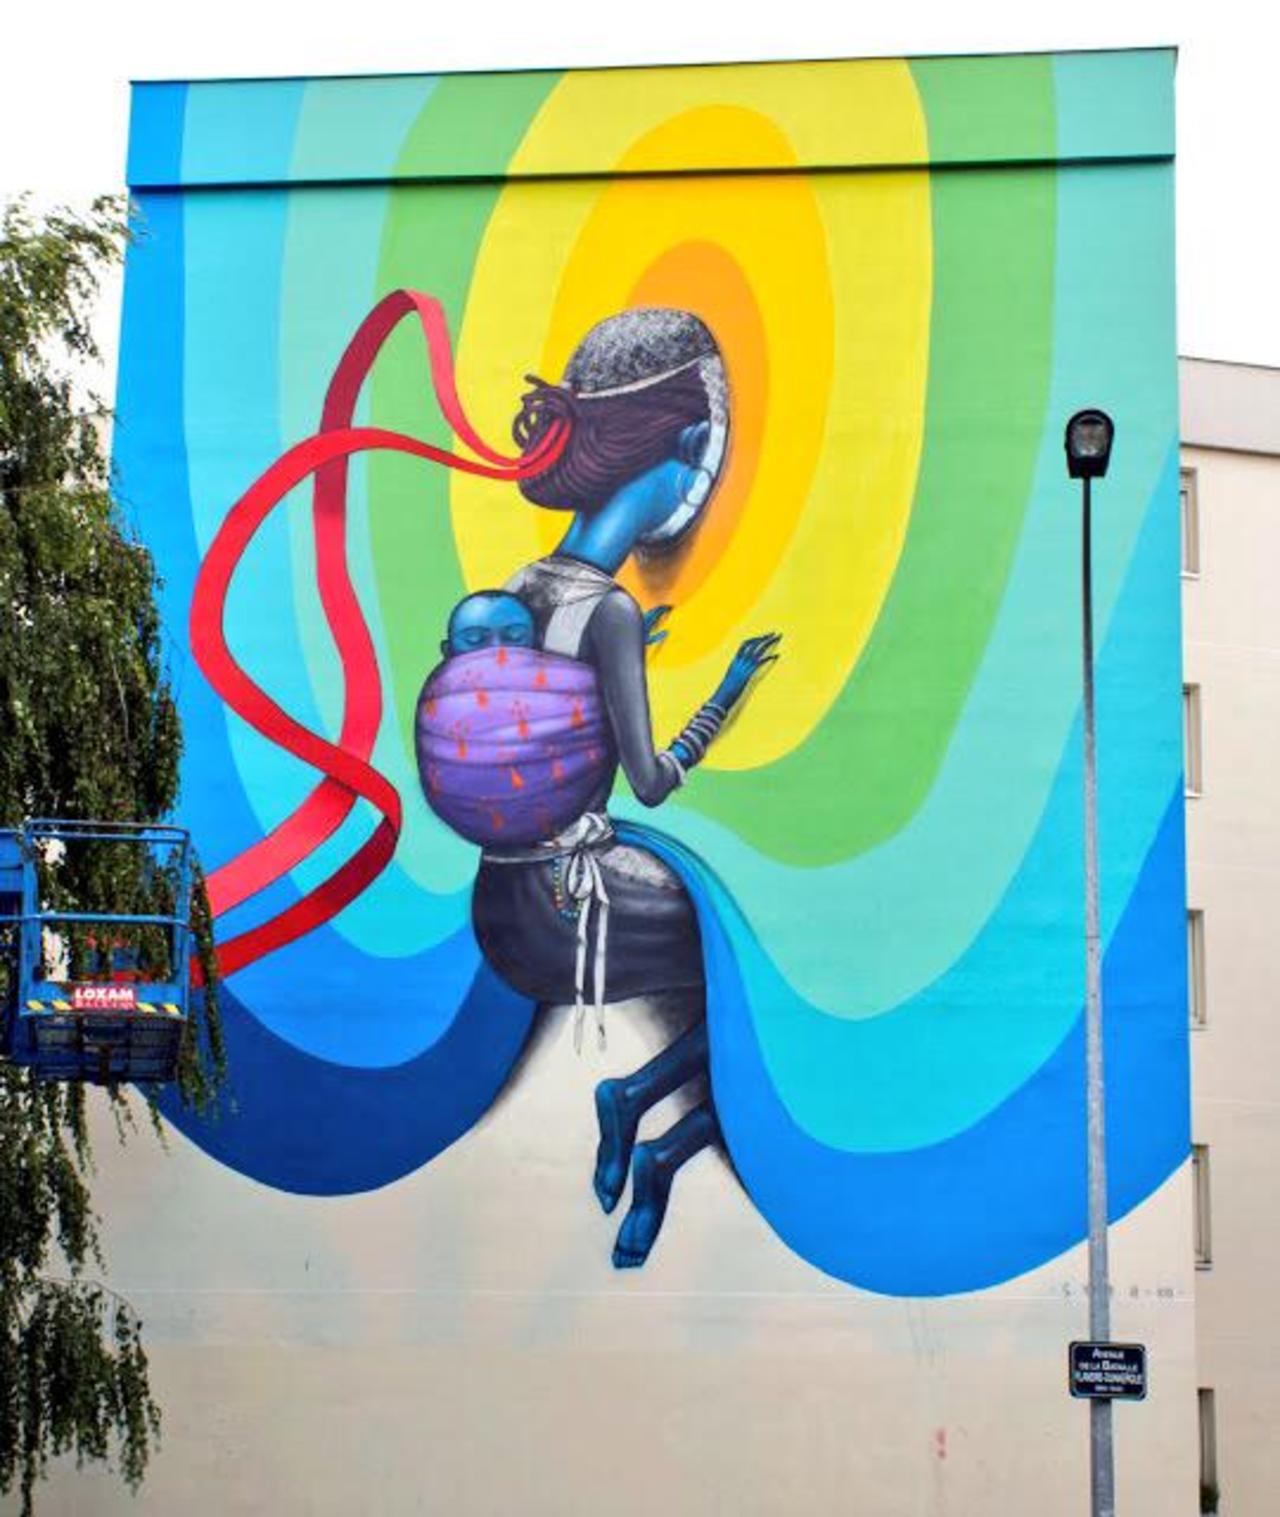 Seth 
Rennes, France
#streetart #art #graffiti #mural http://t.co/0vDujtoTUe